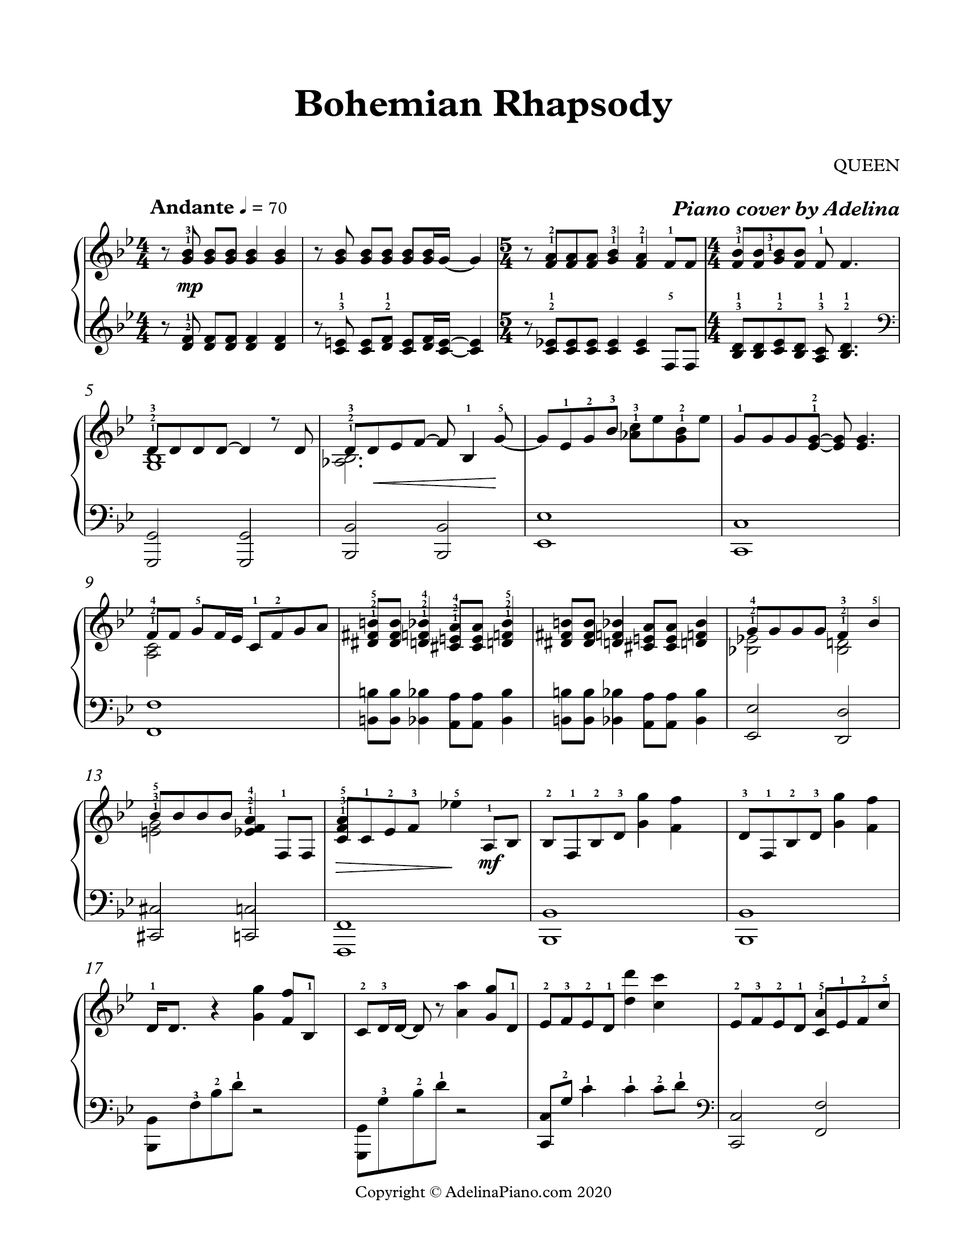 QUEEN - Bohemian Rhapsody 楽譜 by Adelina Piano